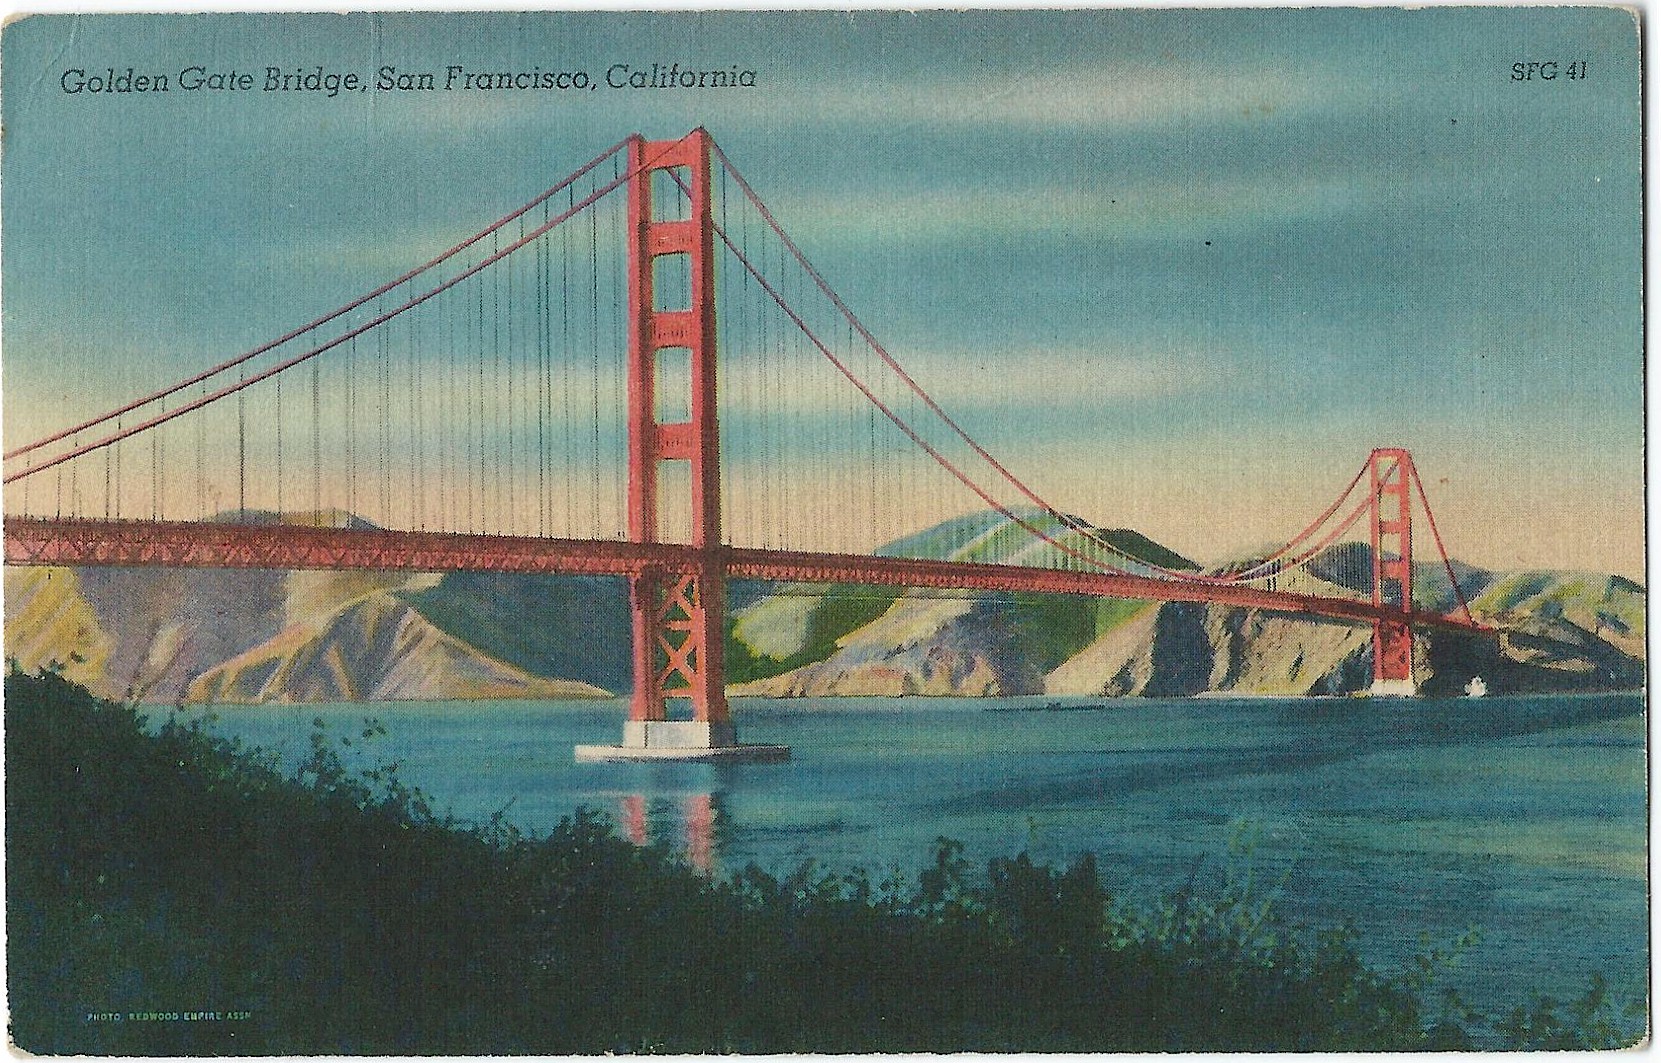 GOLDEN GATE BRIDGE SAN FRANCISCO CALIFORNIA SFG 41 18737